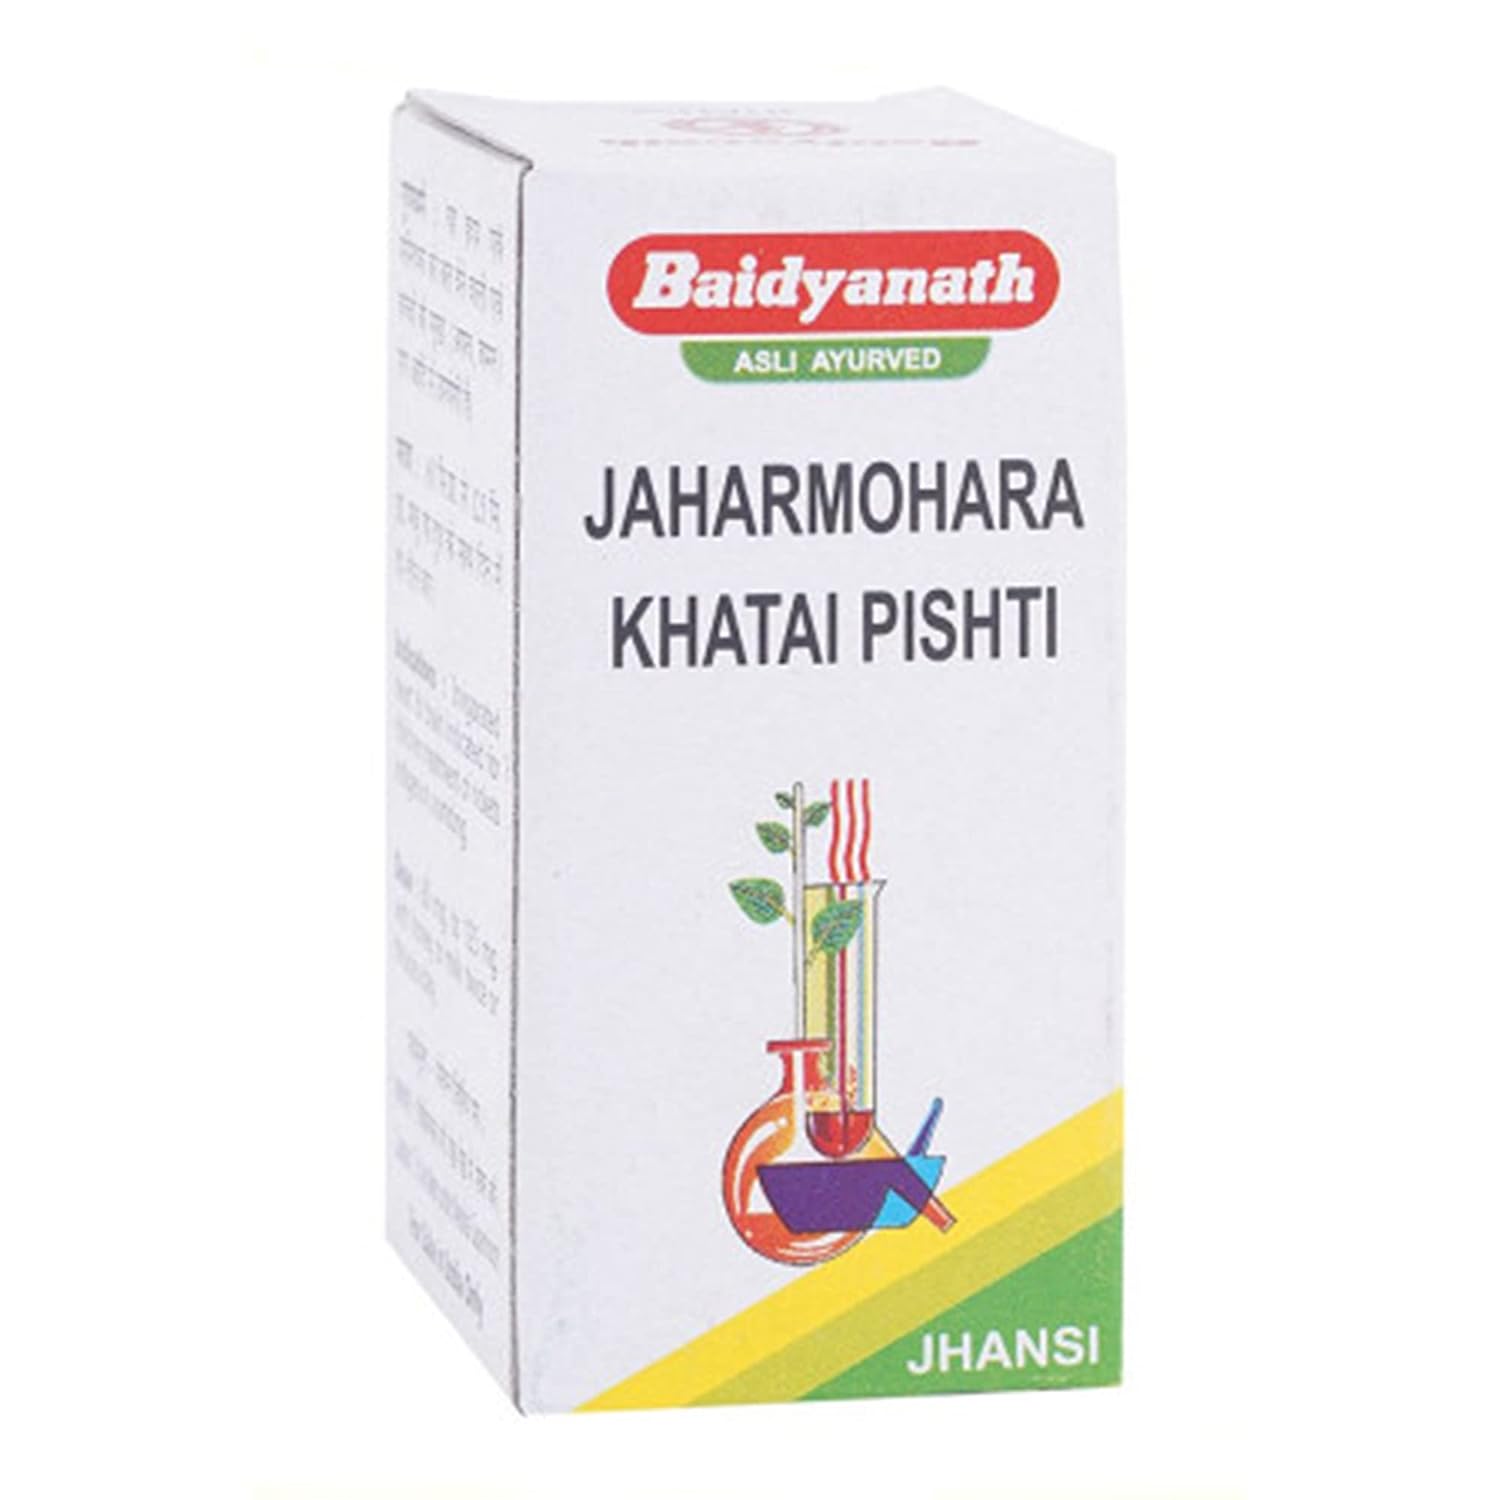 Baidyanath (Jhansi) Jaharmohara Khatai Pishti - 10gm -  Pack of 2